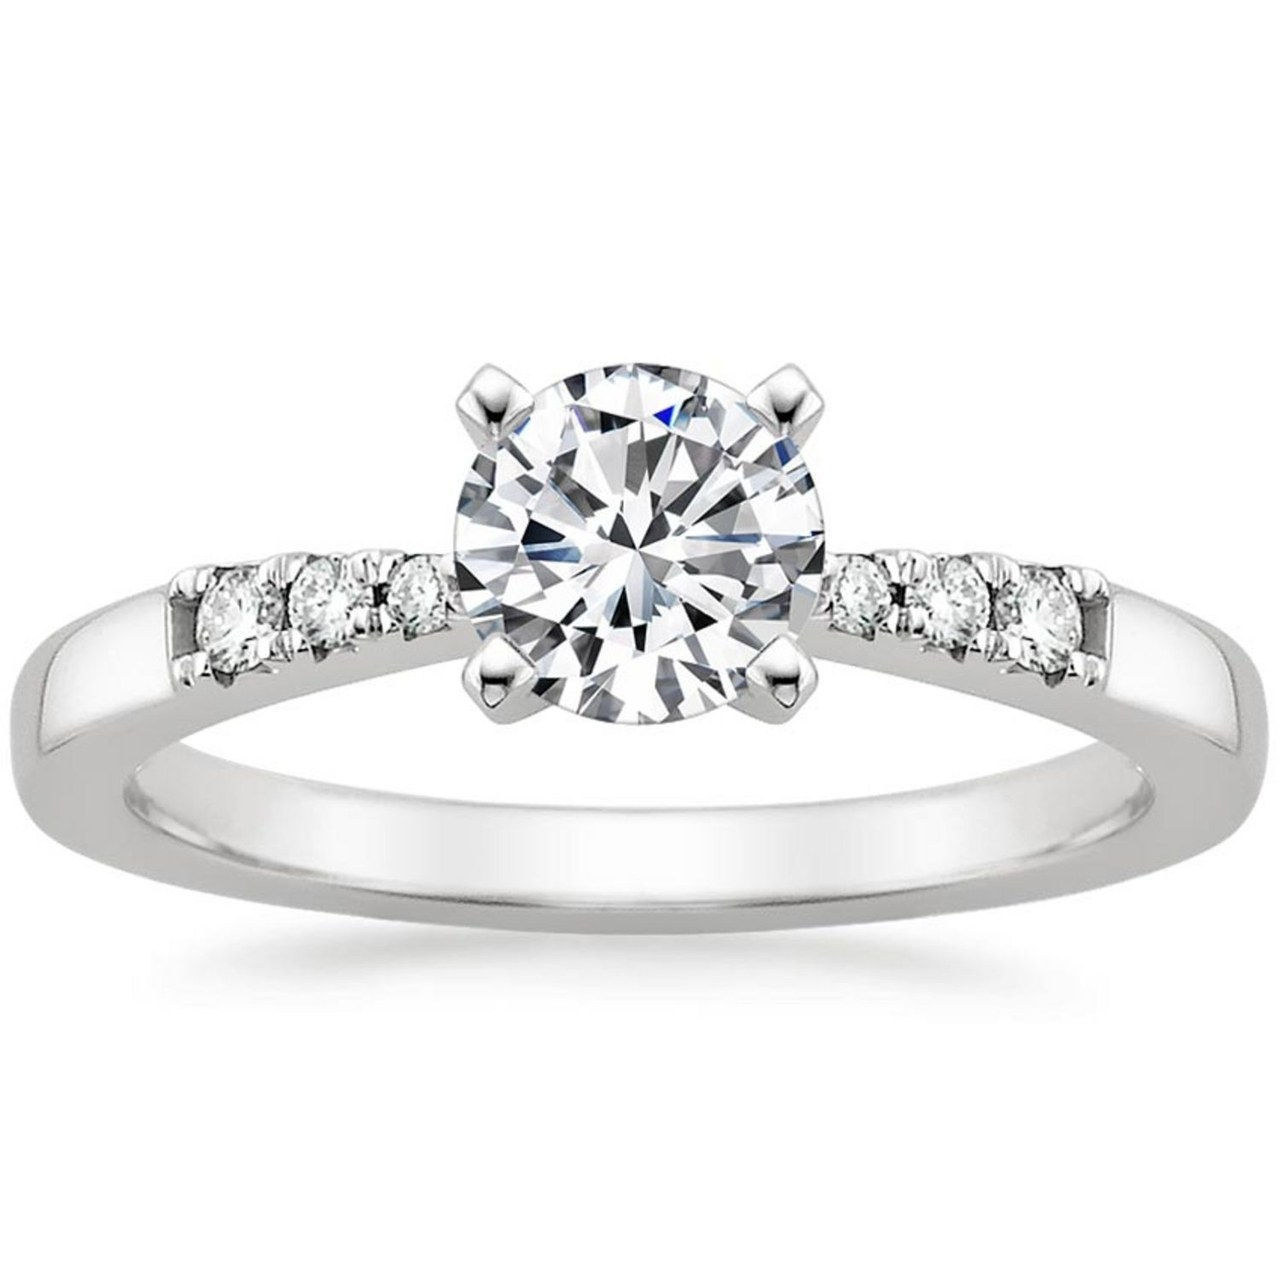 2 diamond engagement rings 0811